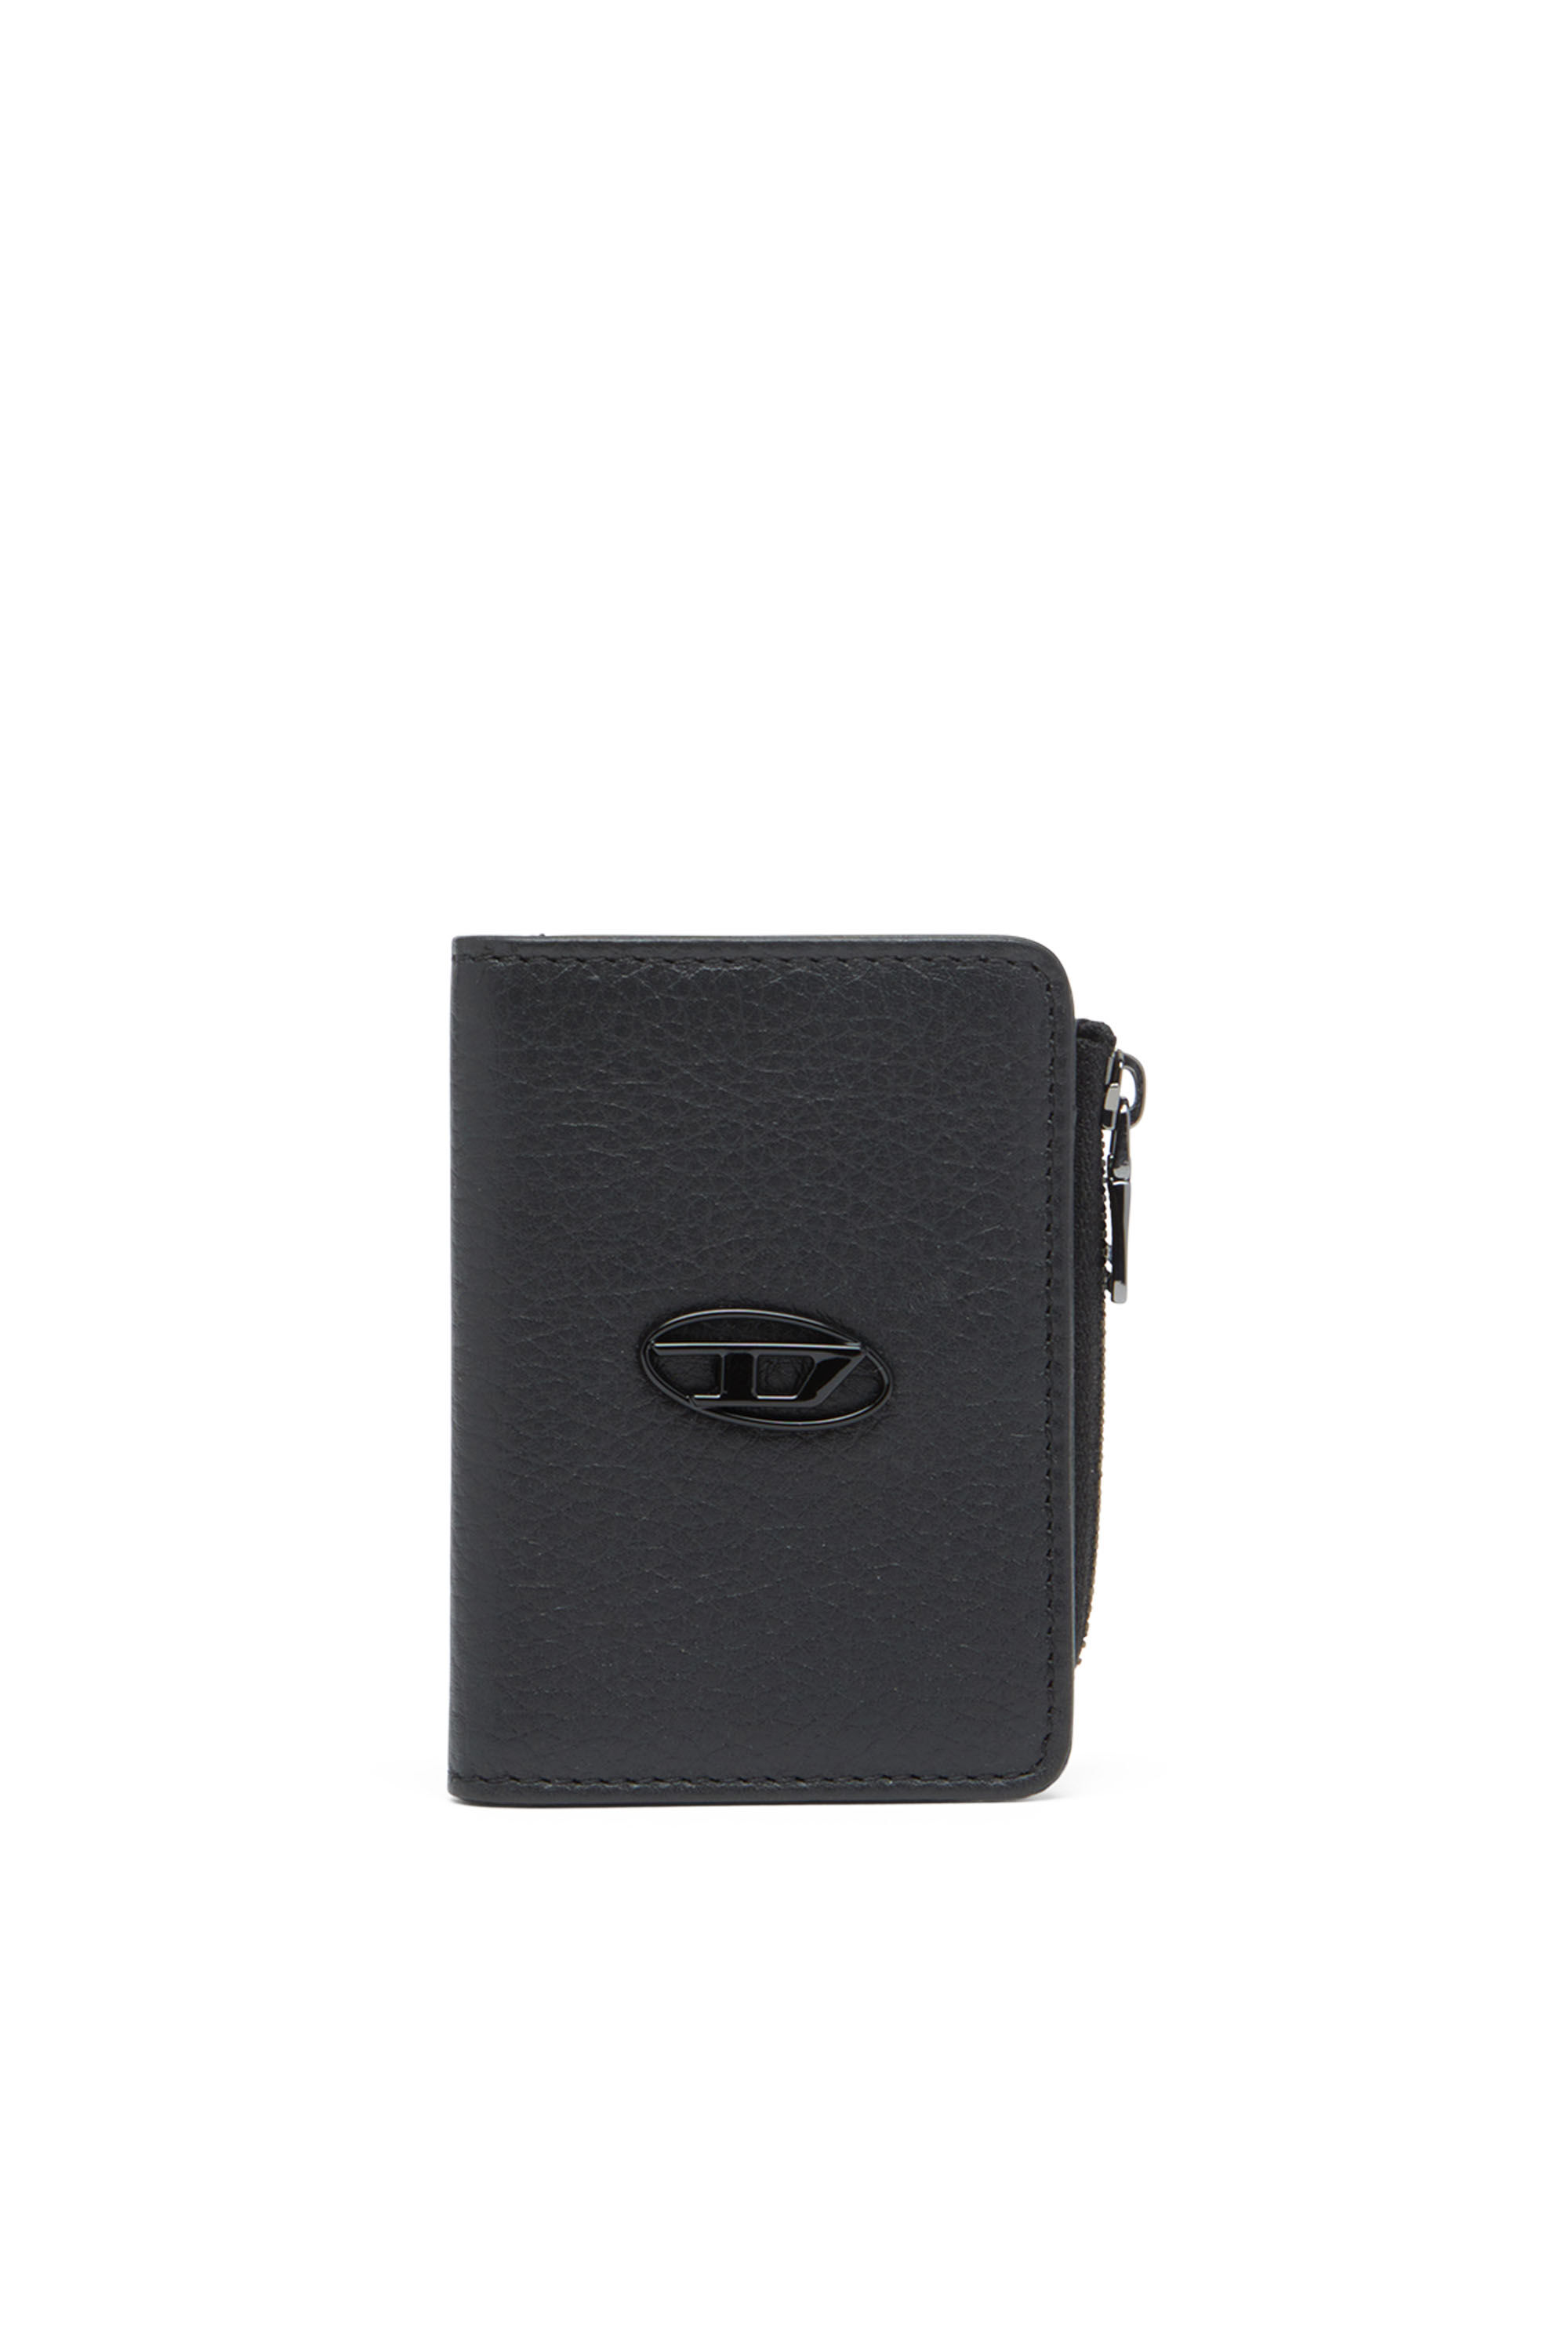 Diesel - HISSU EVO CARD HOLDER L, Man Leather card holder in Black - Image 1